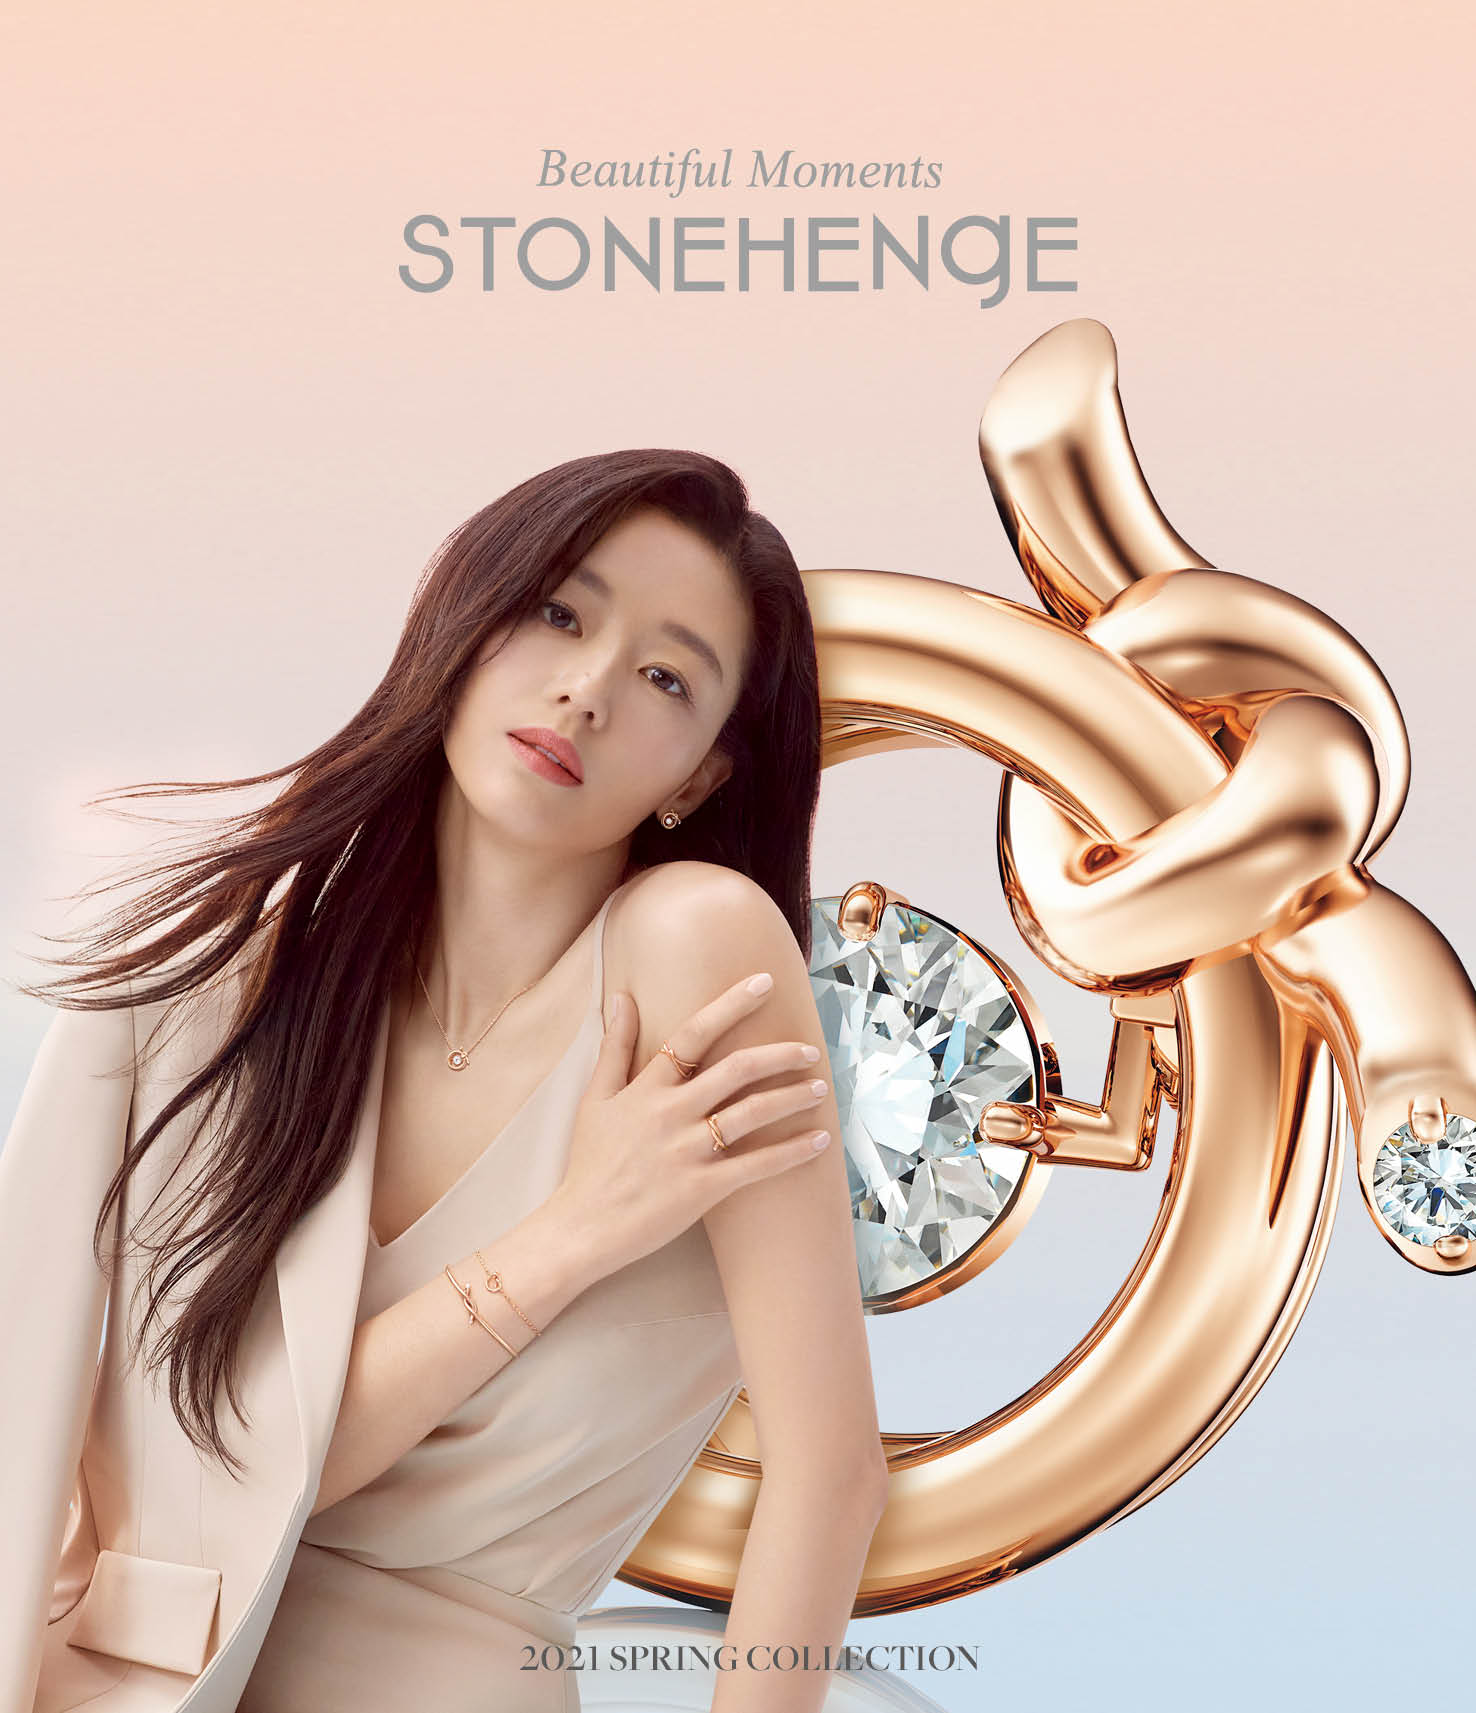 Mesmerizing Gianna Jun in Stonehenge Photoshoot 2021